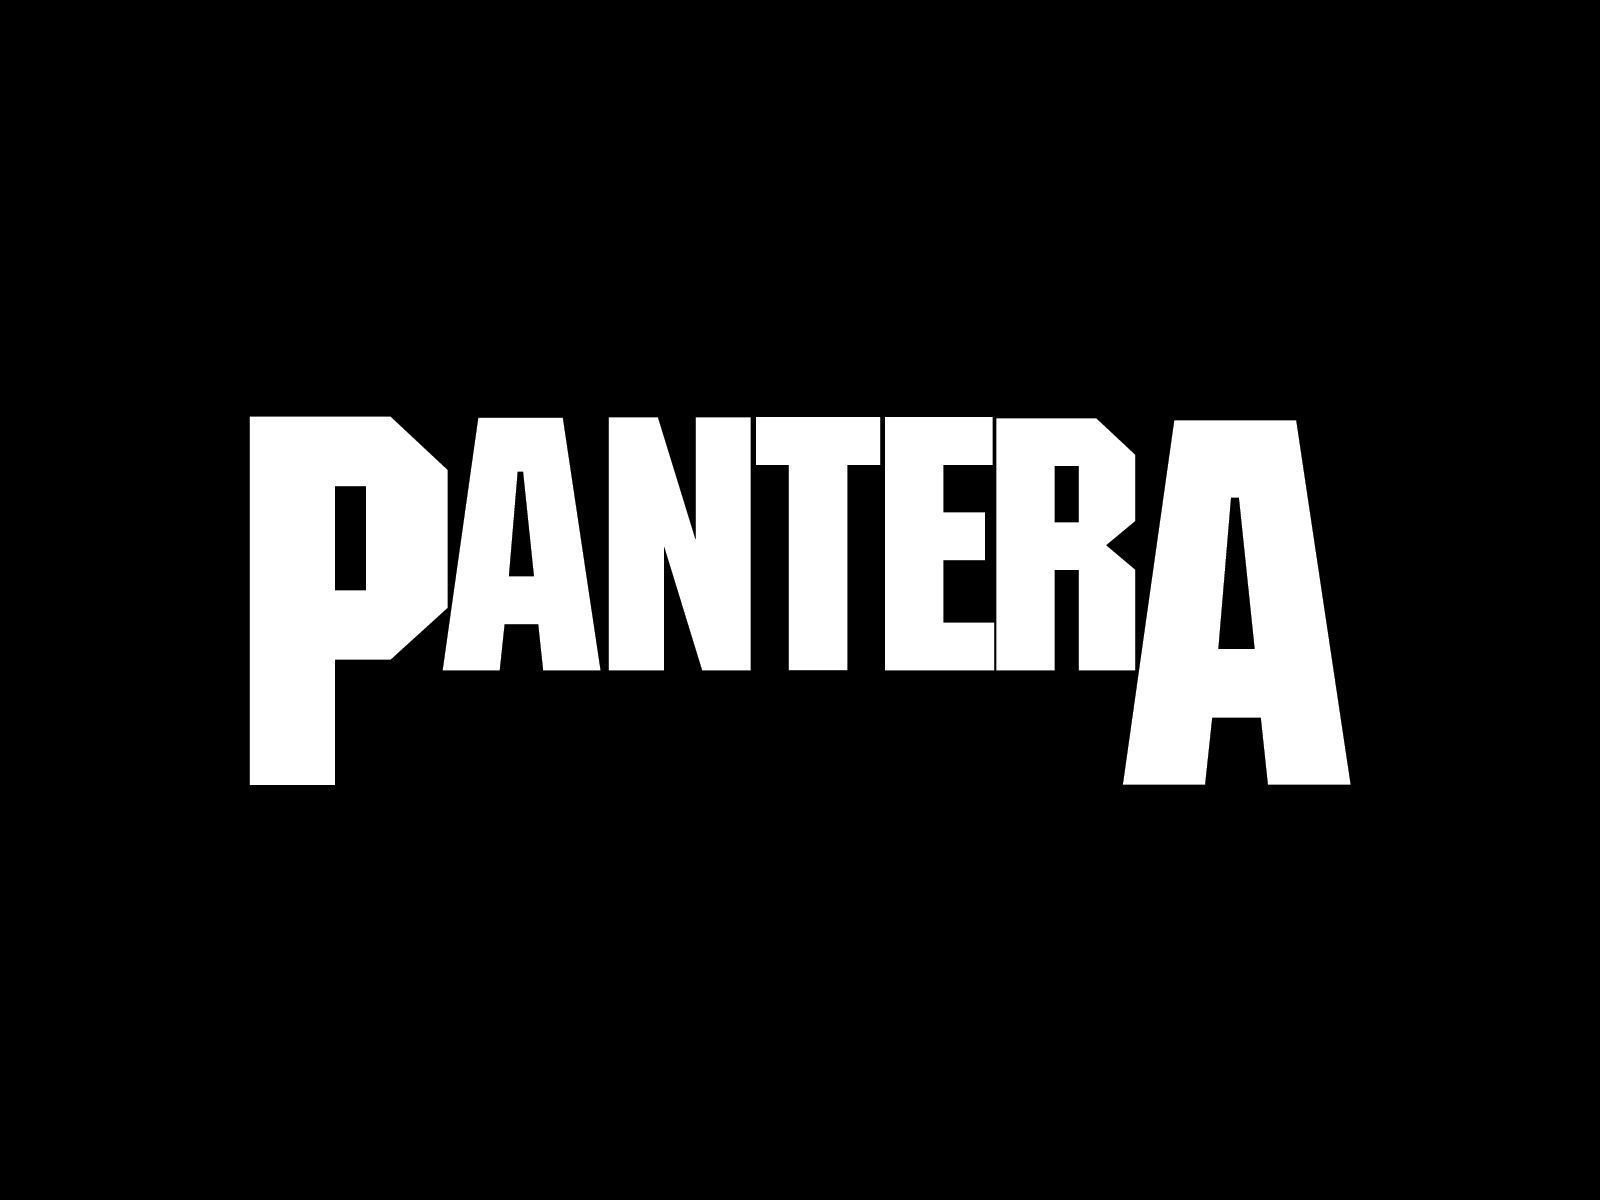 pantera wallpaper | Band logos - Rock band logos, metal bands ...